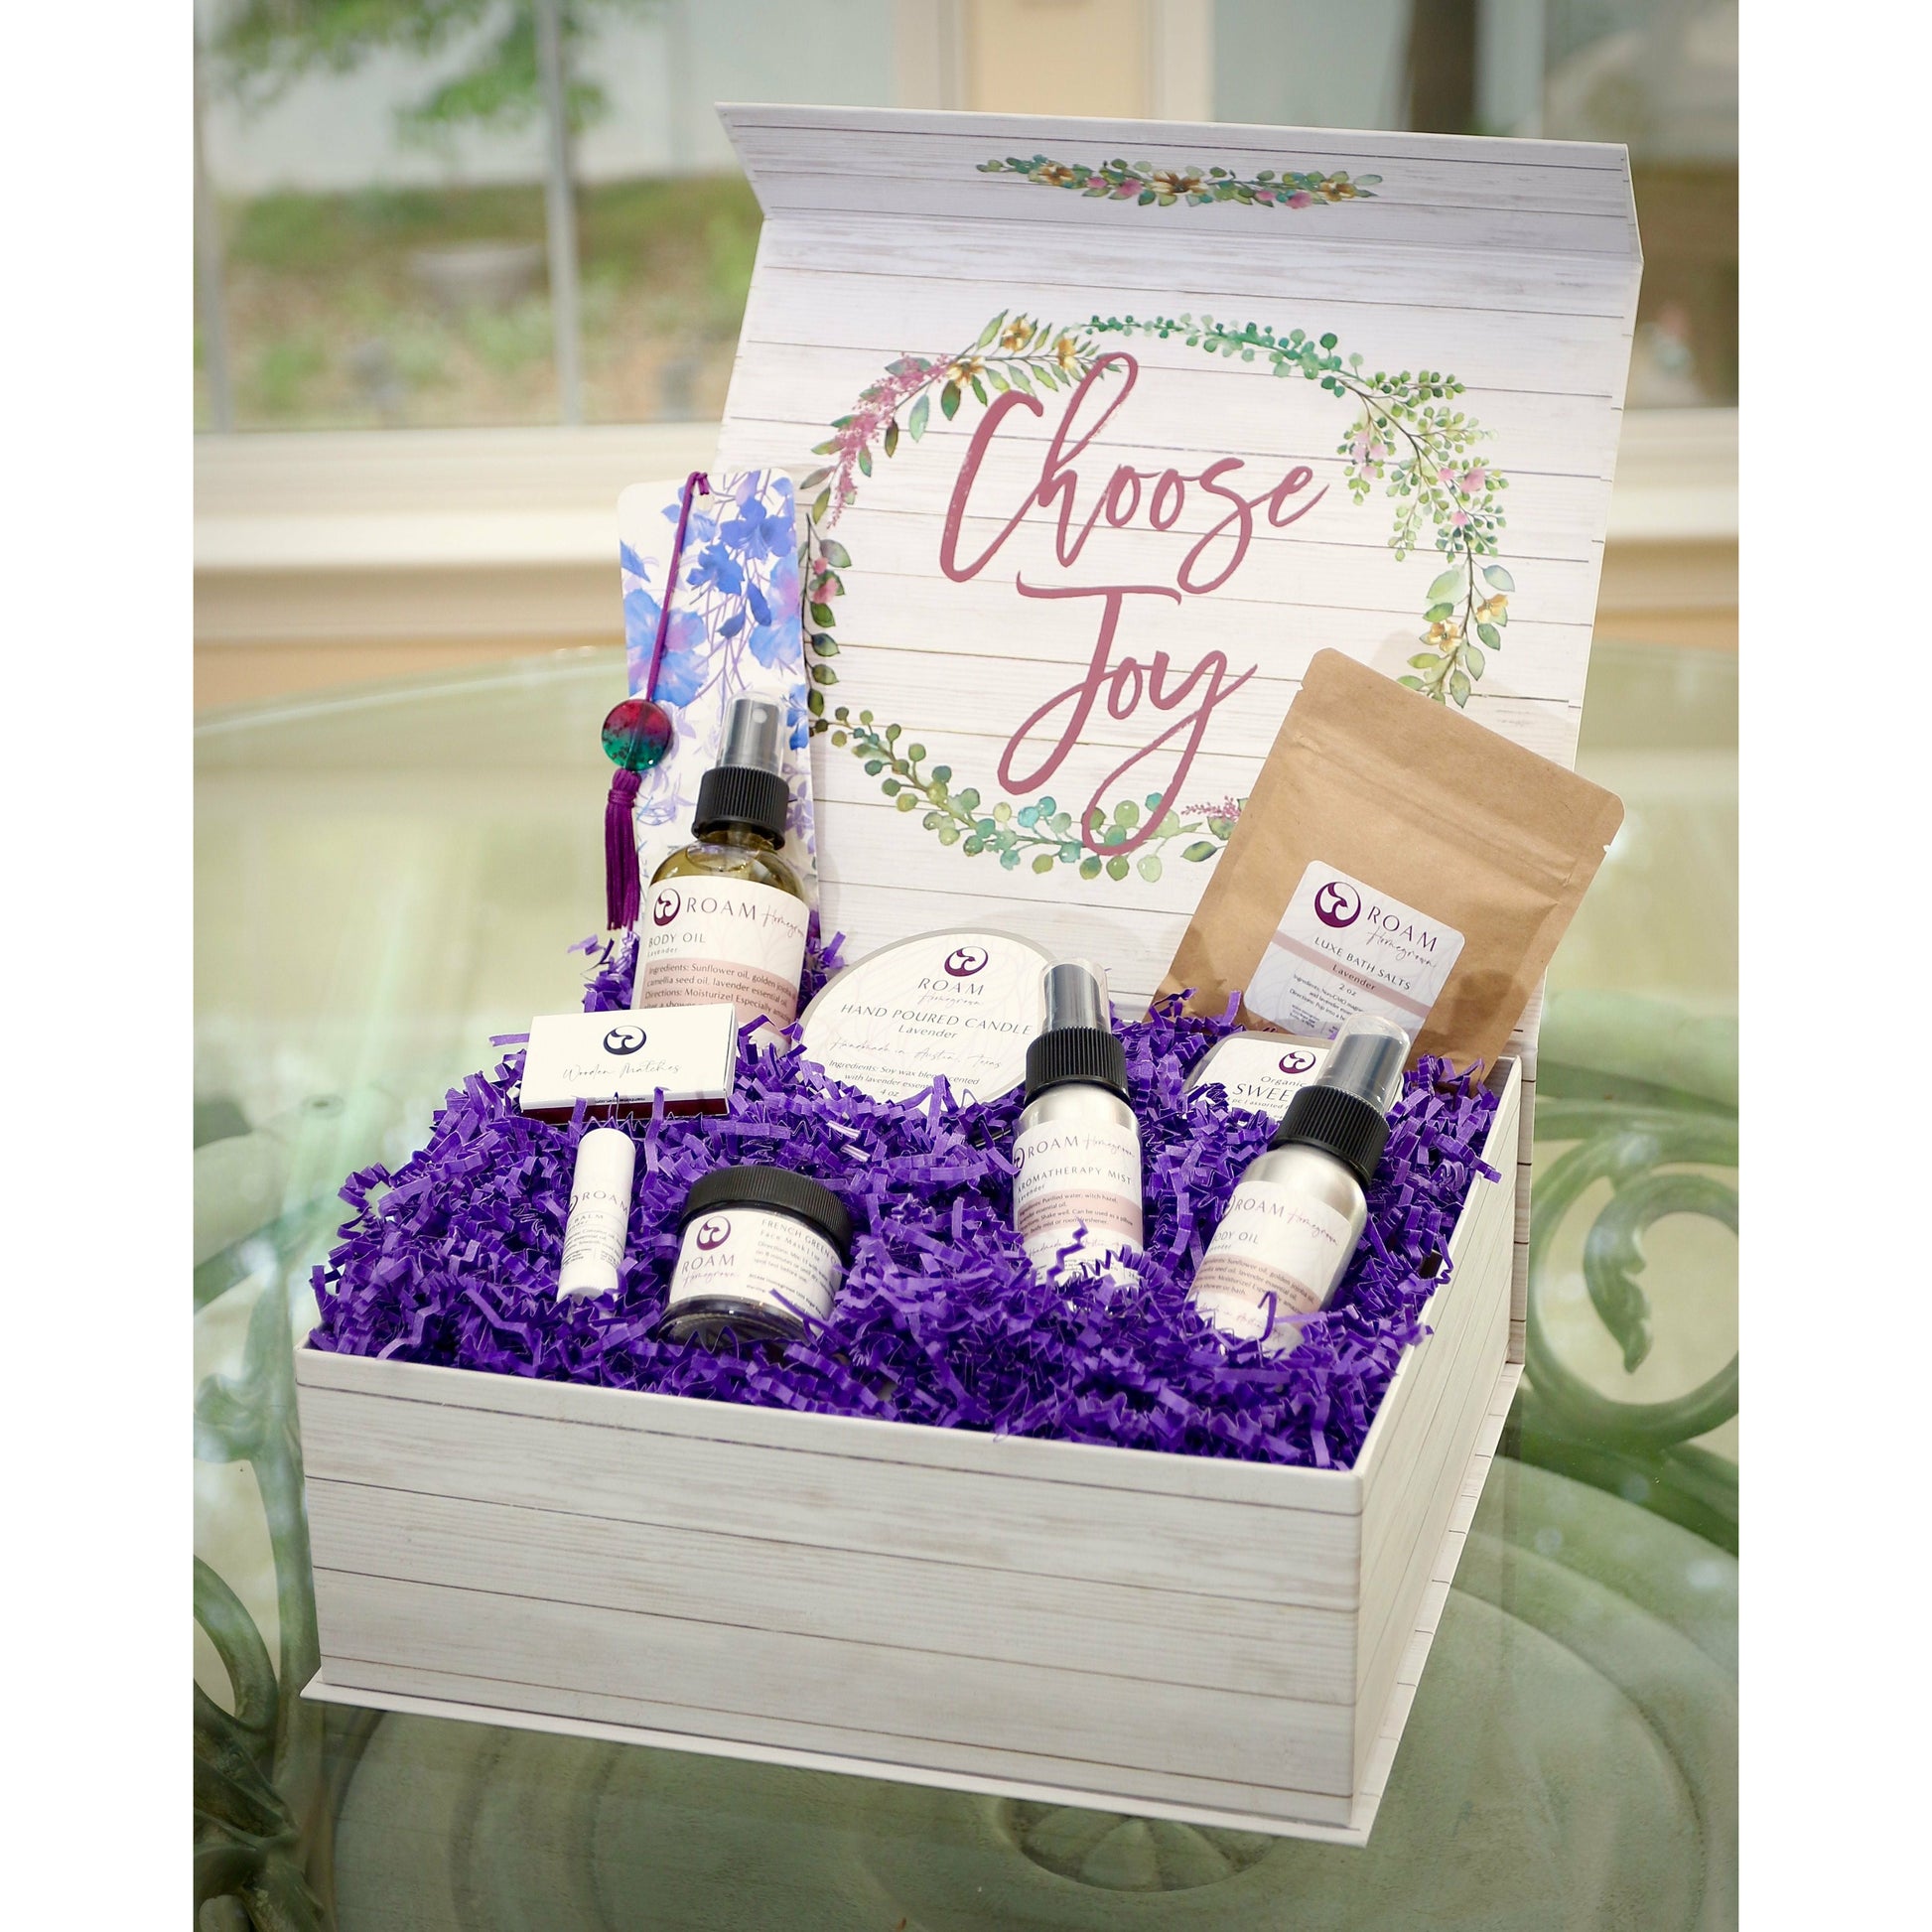 Custom Choose Joy Gift Box - DJW Custom Baskets & Beyond